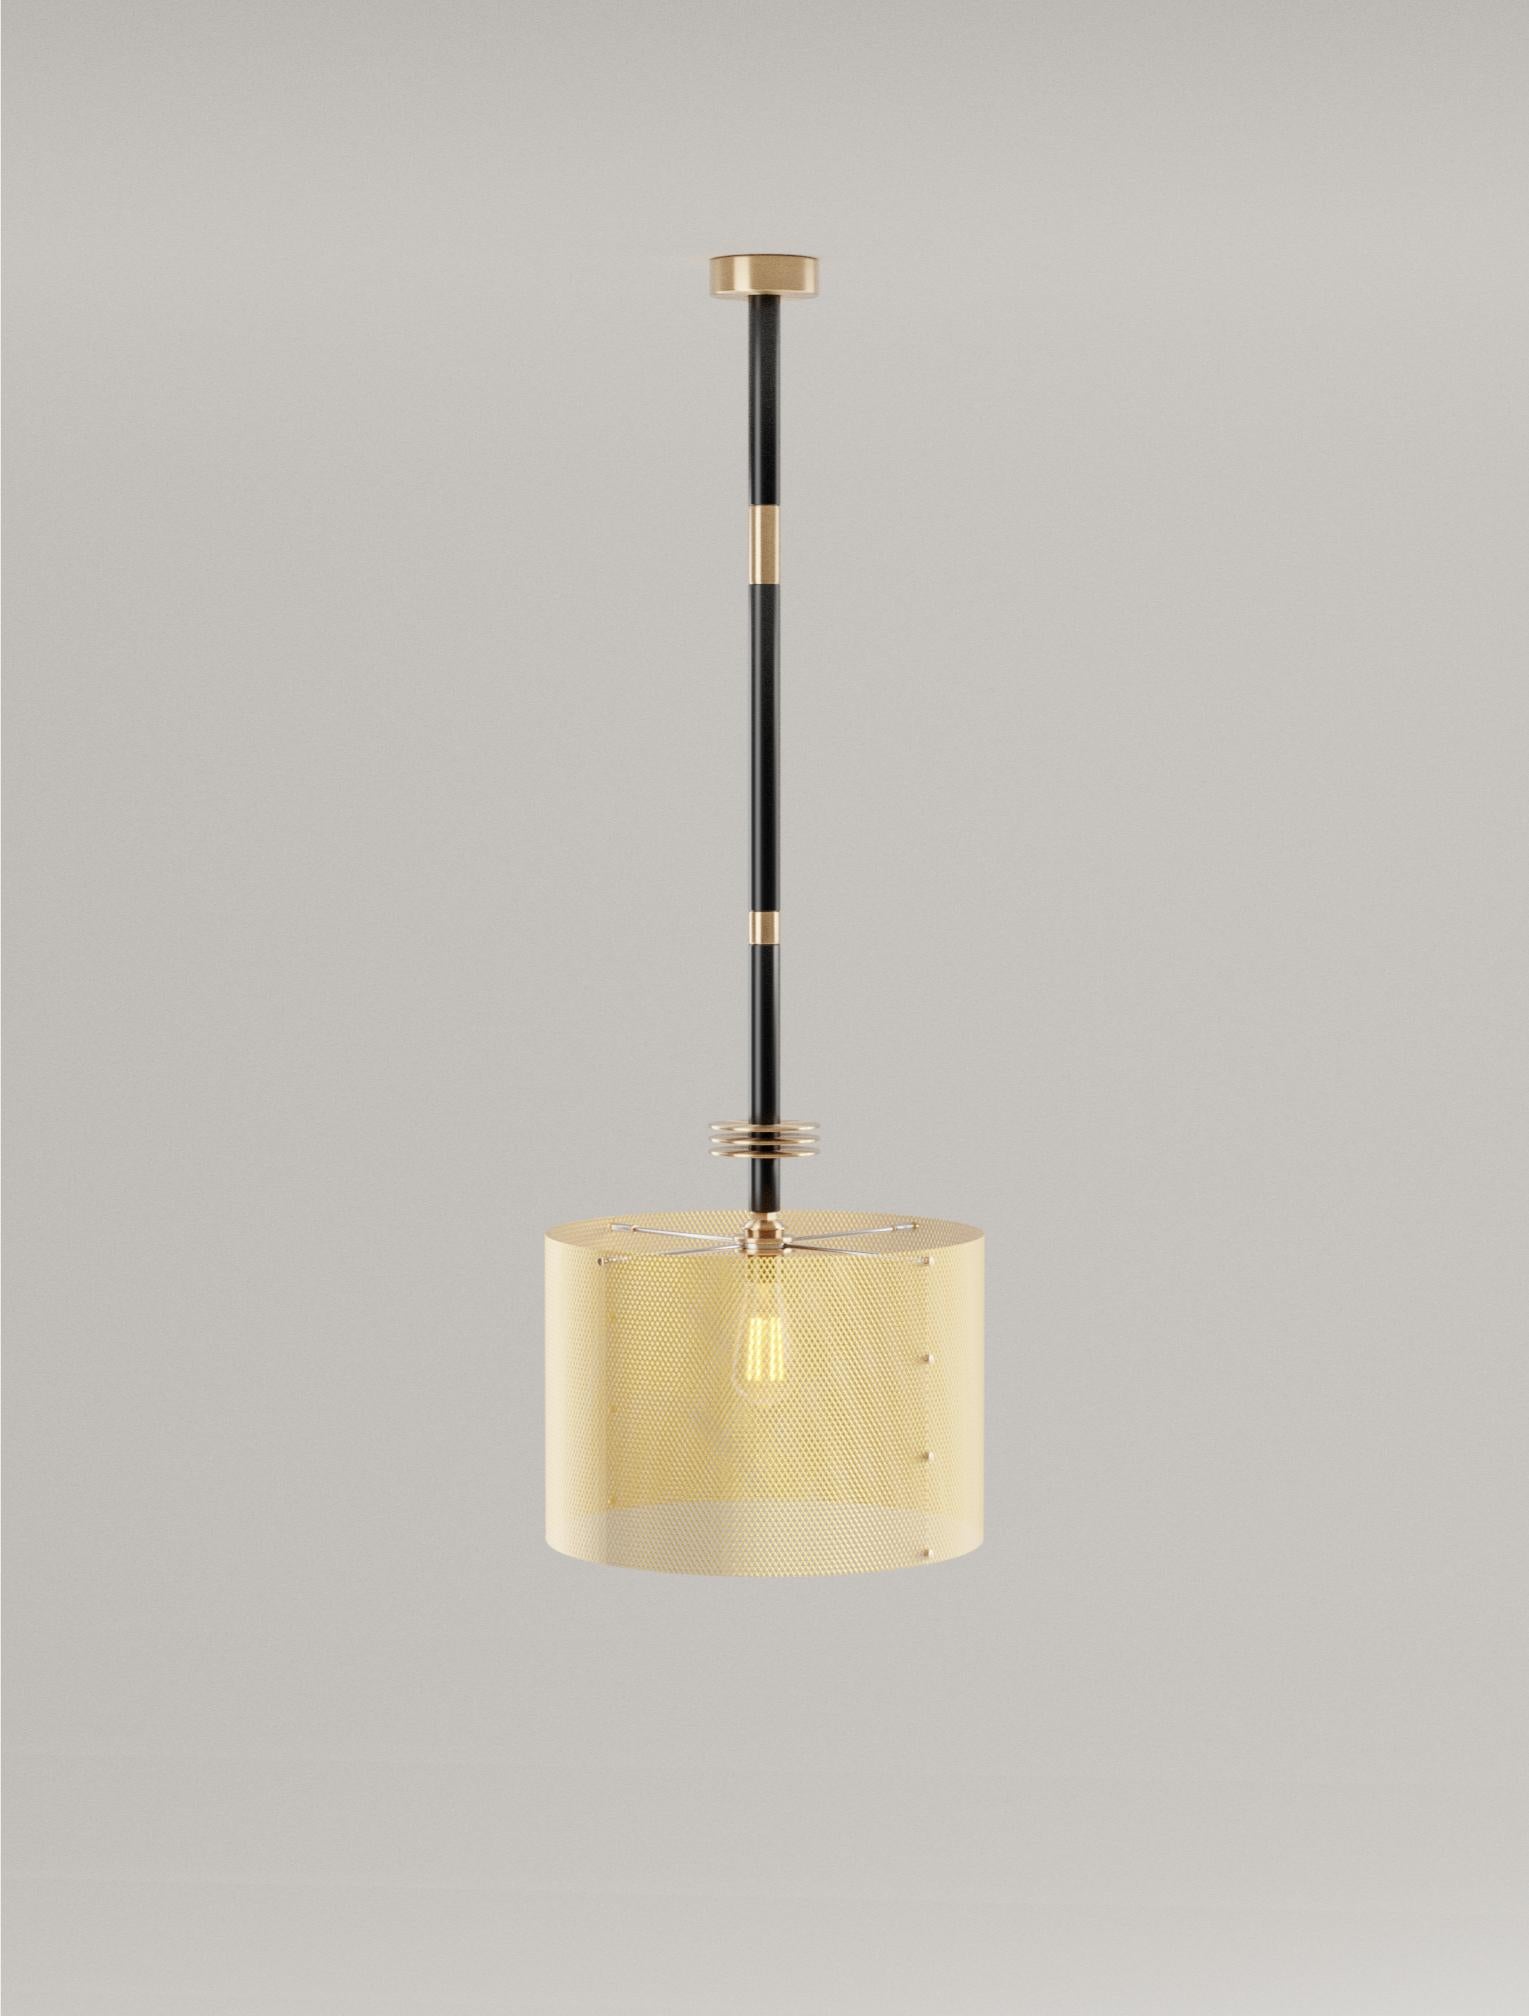 21st C Contemporary Marine Breynaert Pendant Lamp Brushed Brass For Sale 2